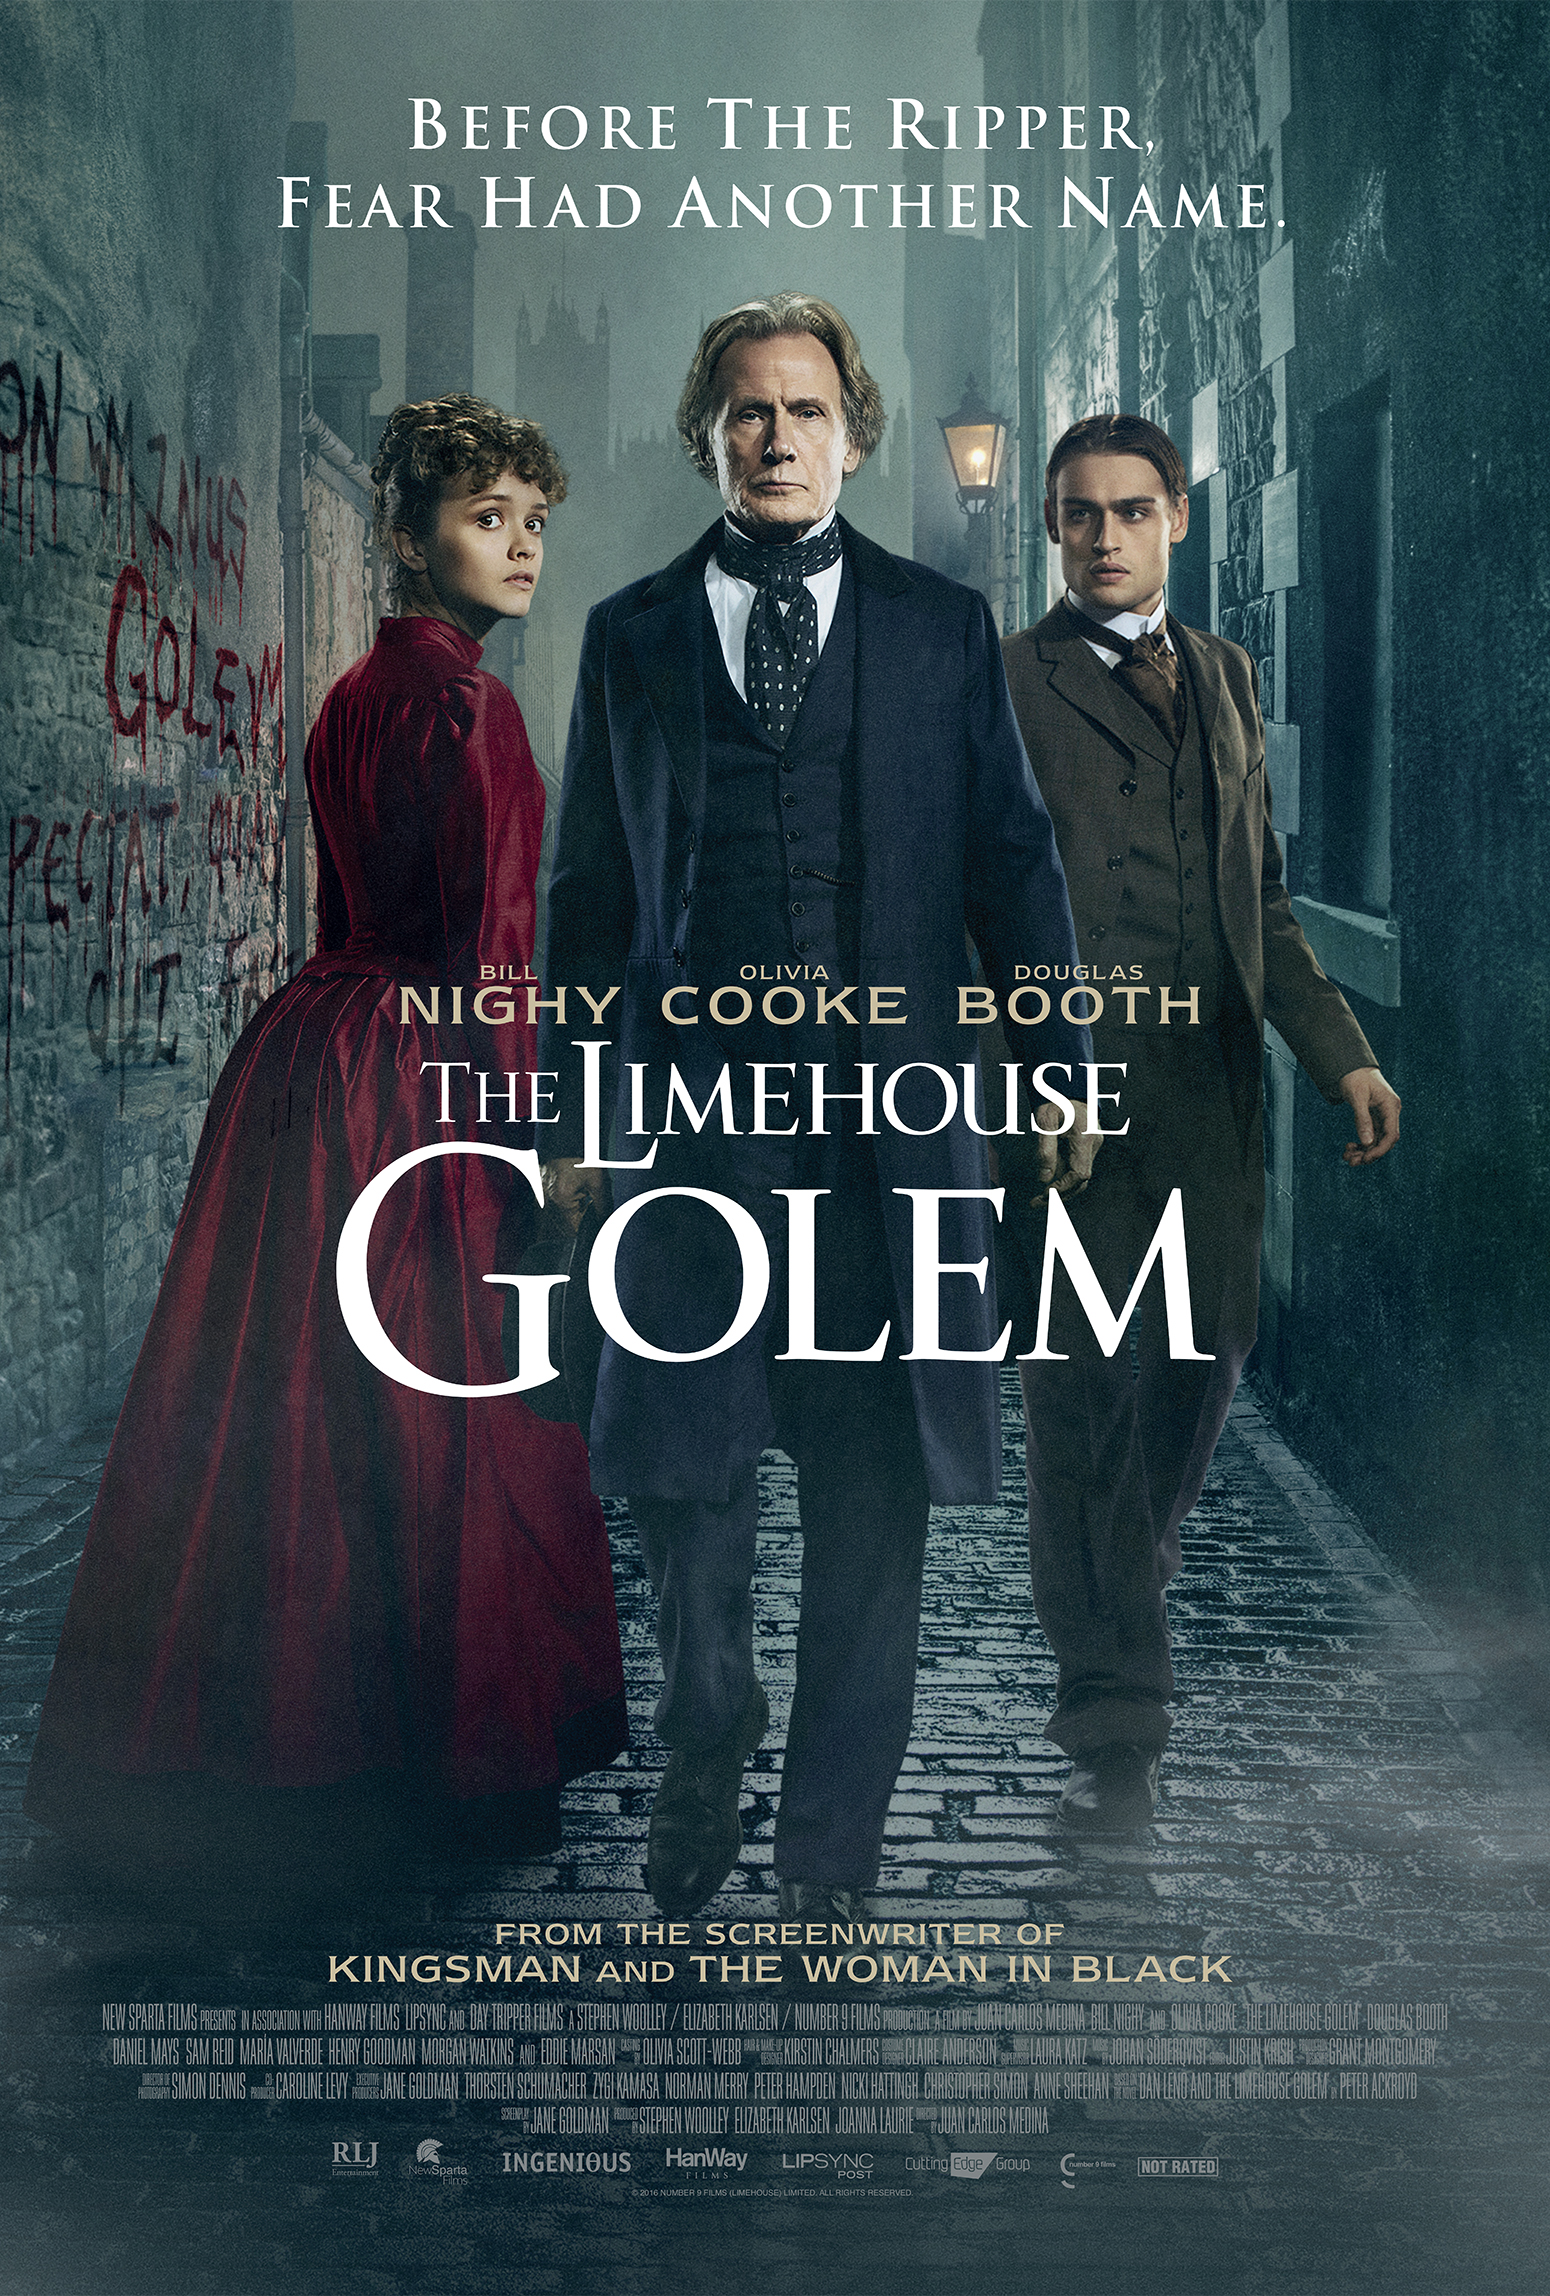 Nonton film The Limehouse Golem layarkaca21 indoxx1 ganool online streaming terbaru